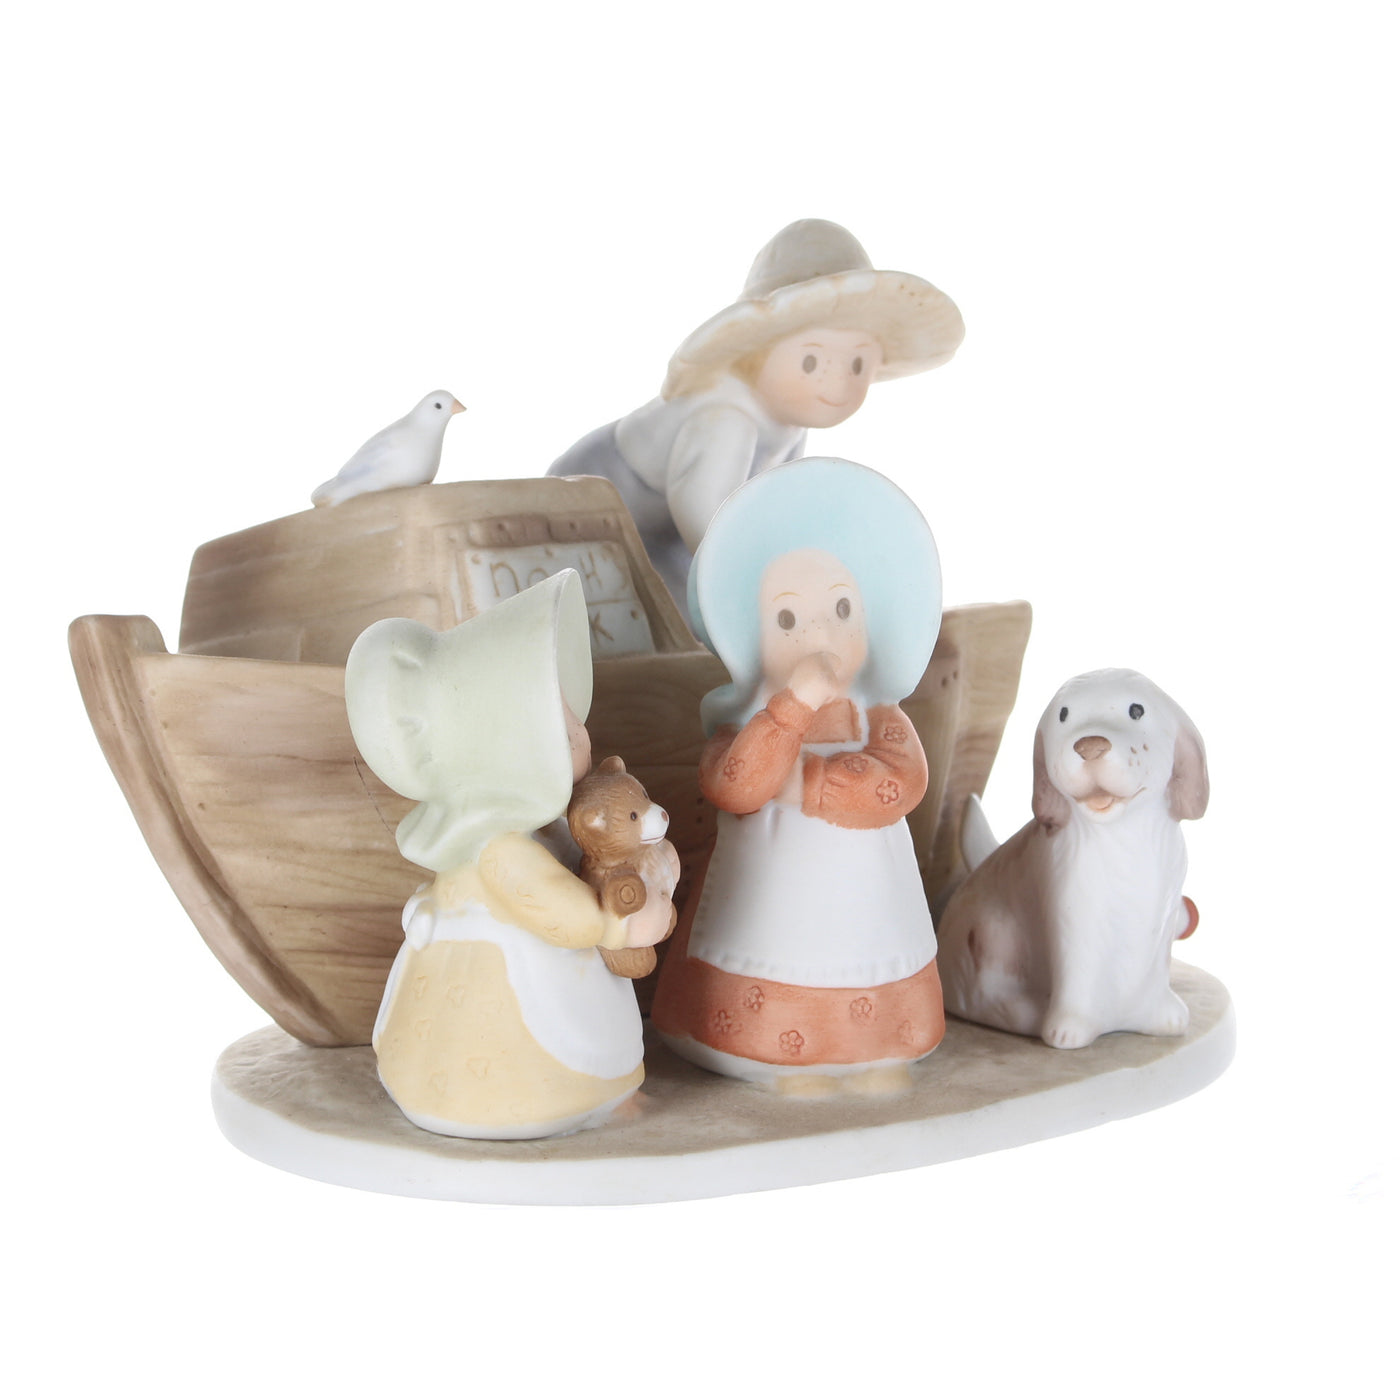 Homco-Circle-of-Friends-Porcelain-Figurine-Noahs-Ark-picture-8